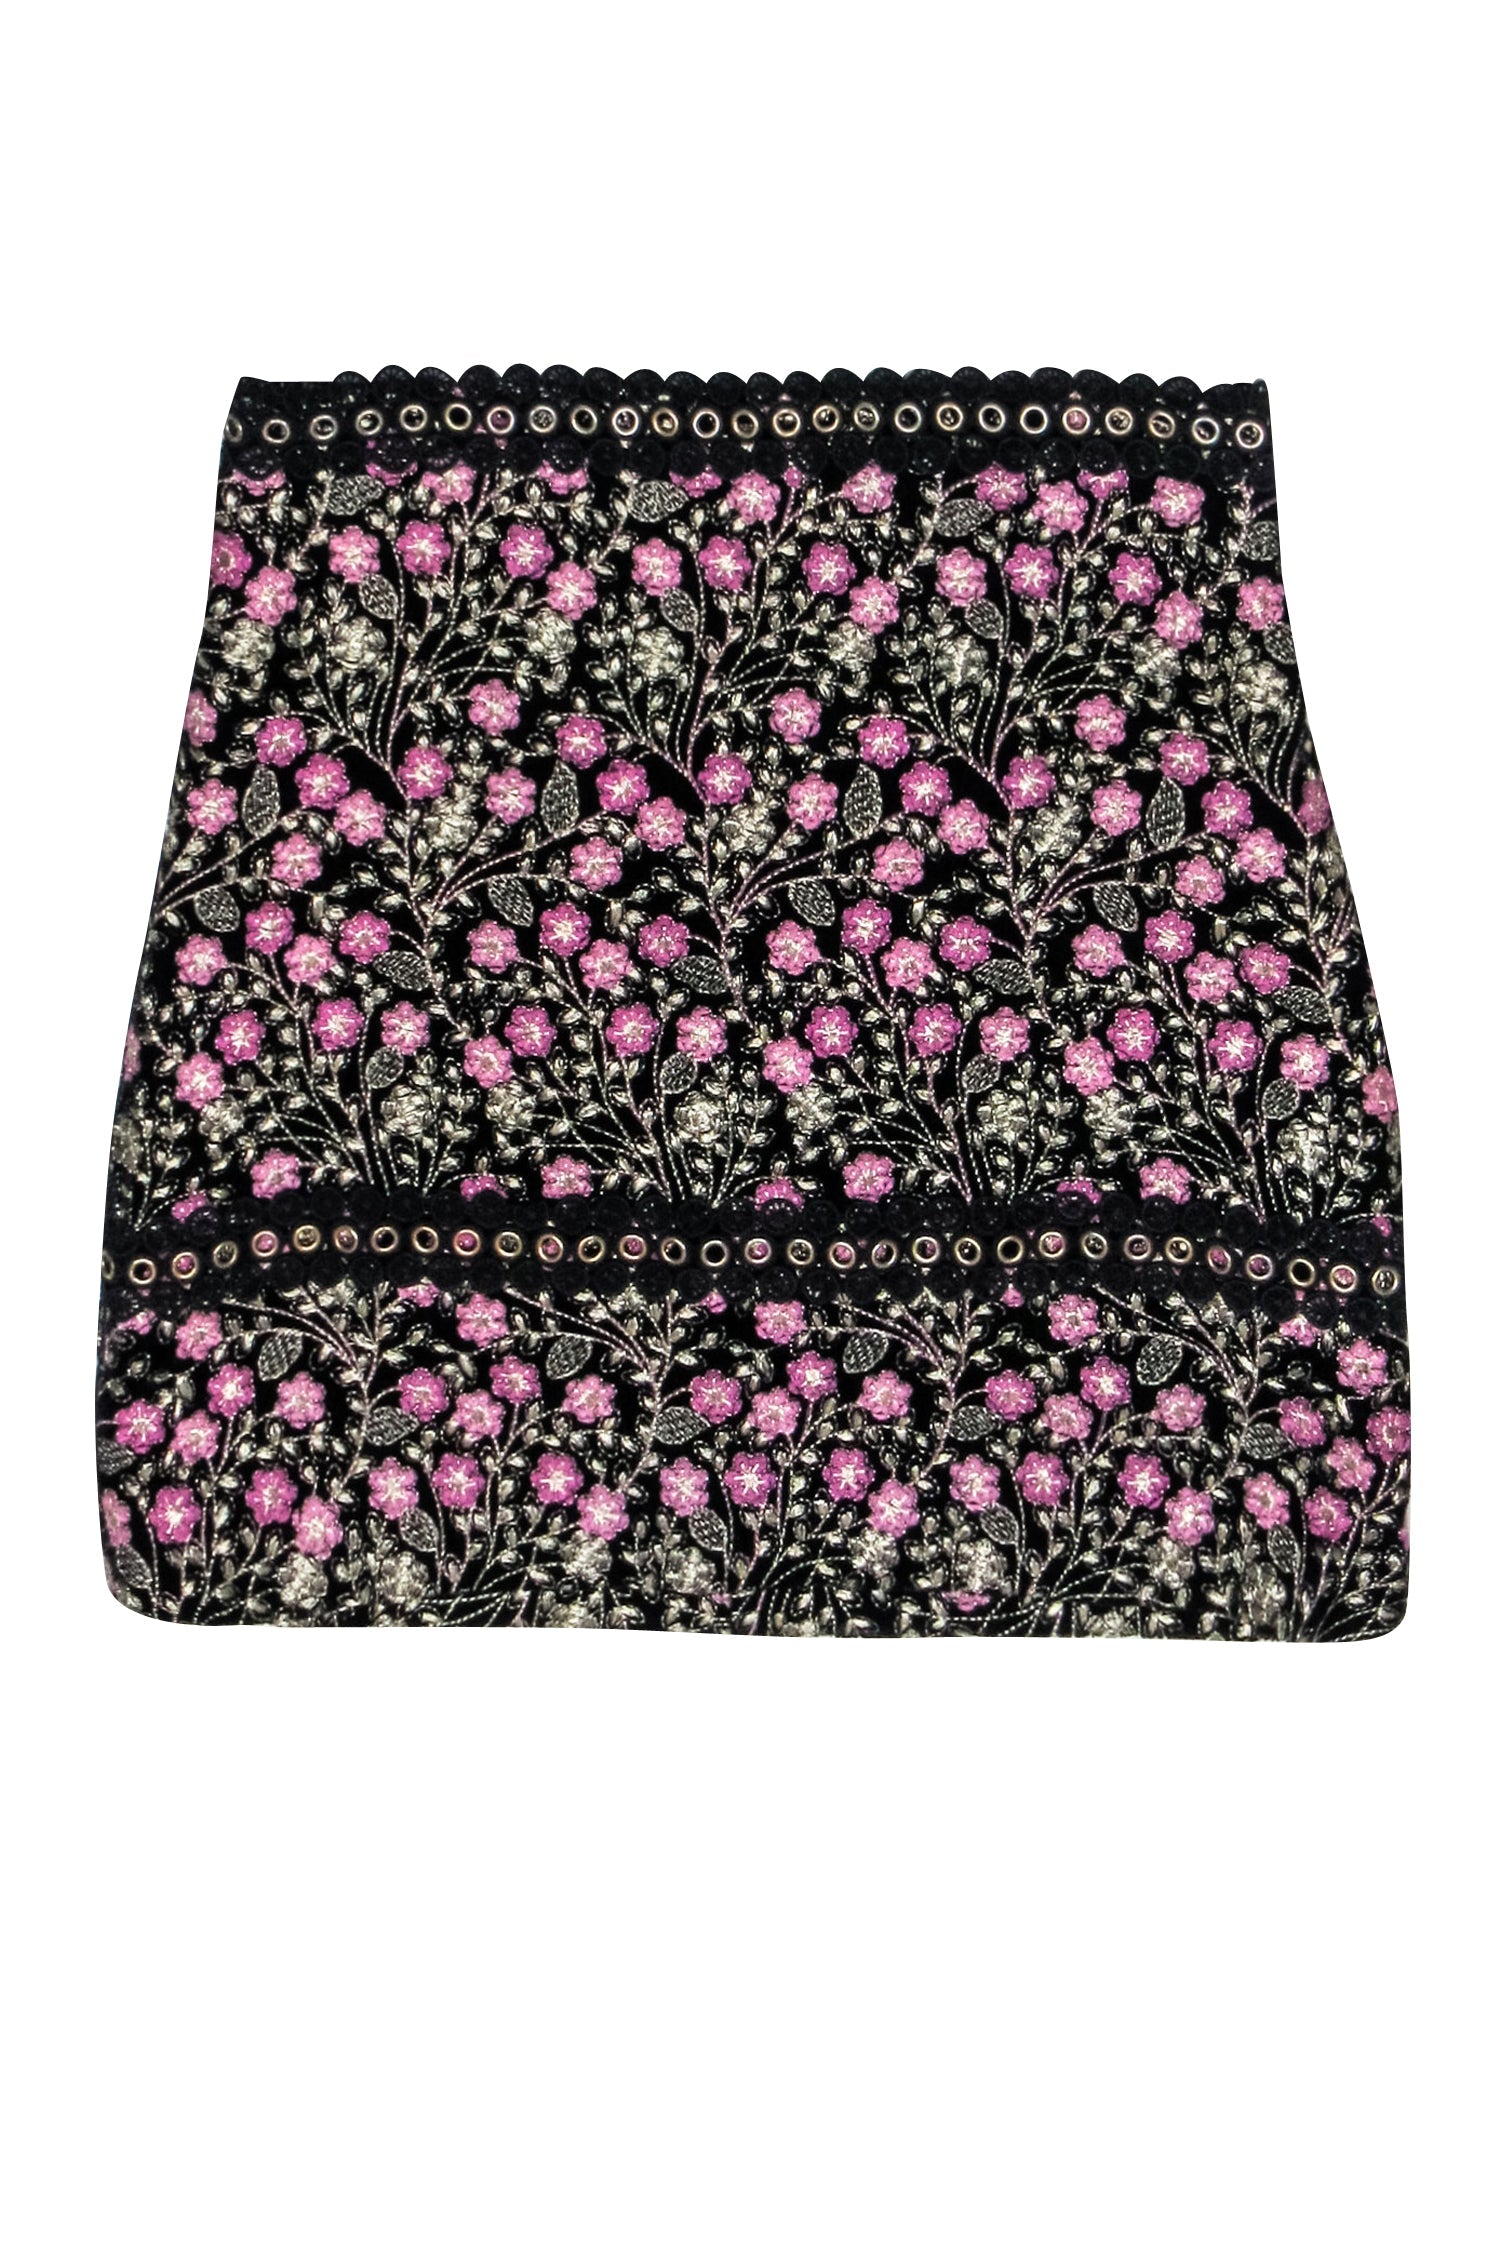 Elliatt - Black, Purple, & Gold Embroidered Floral Skirt w/ Grommet Details Sz S